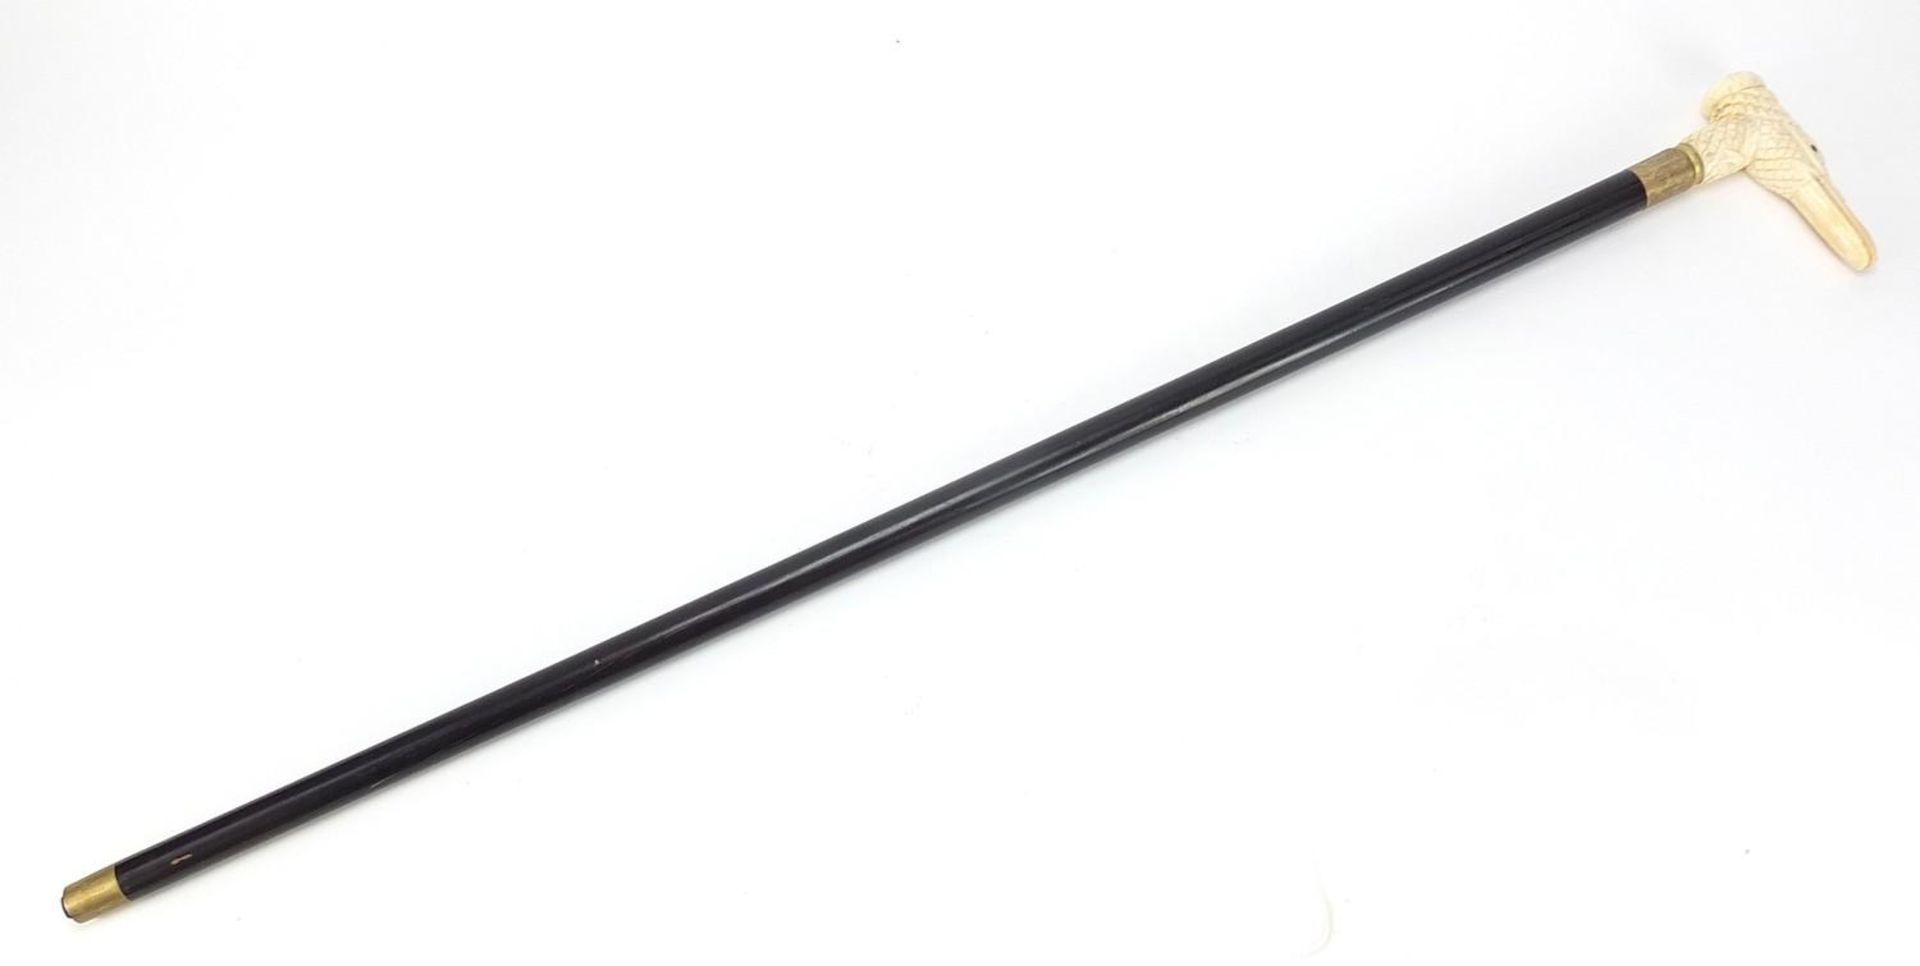 Hardwood walking stick with carved bone duck design handle, 91.5cm in length : - Image 3 of 6